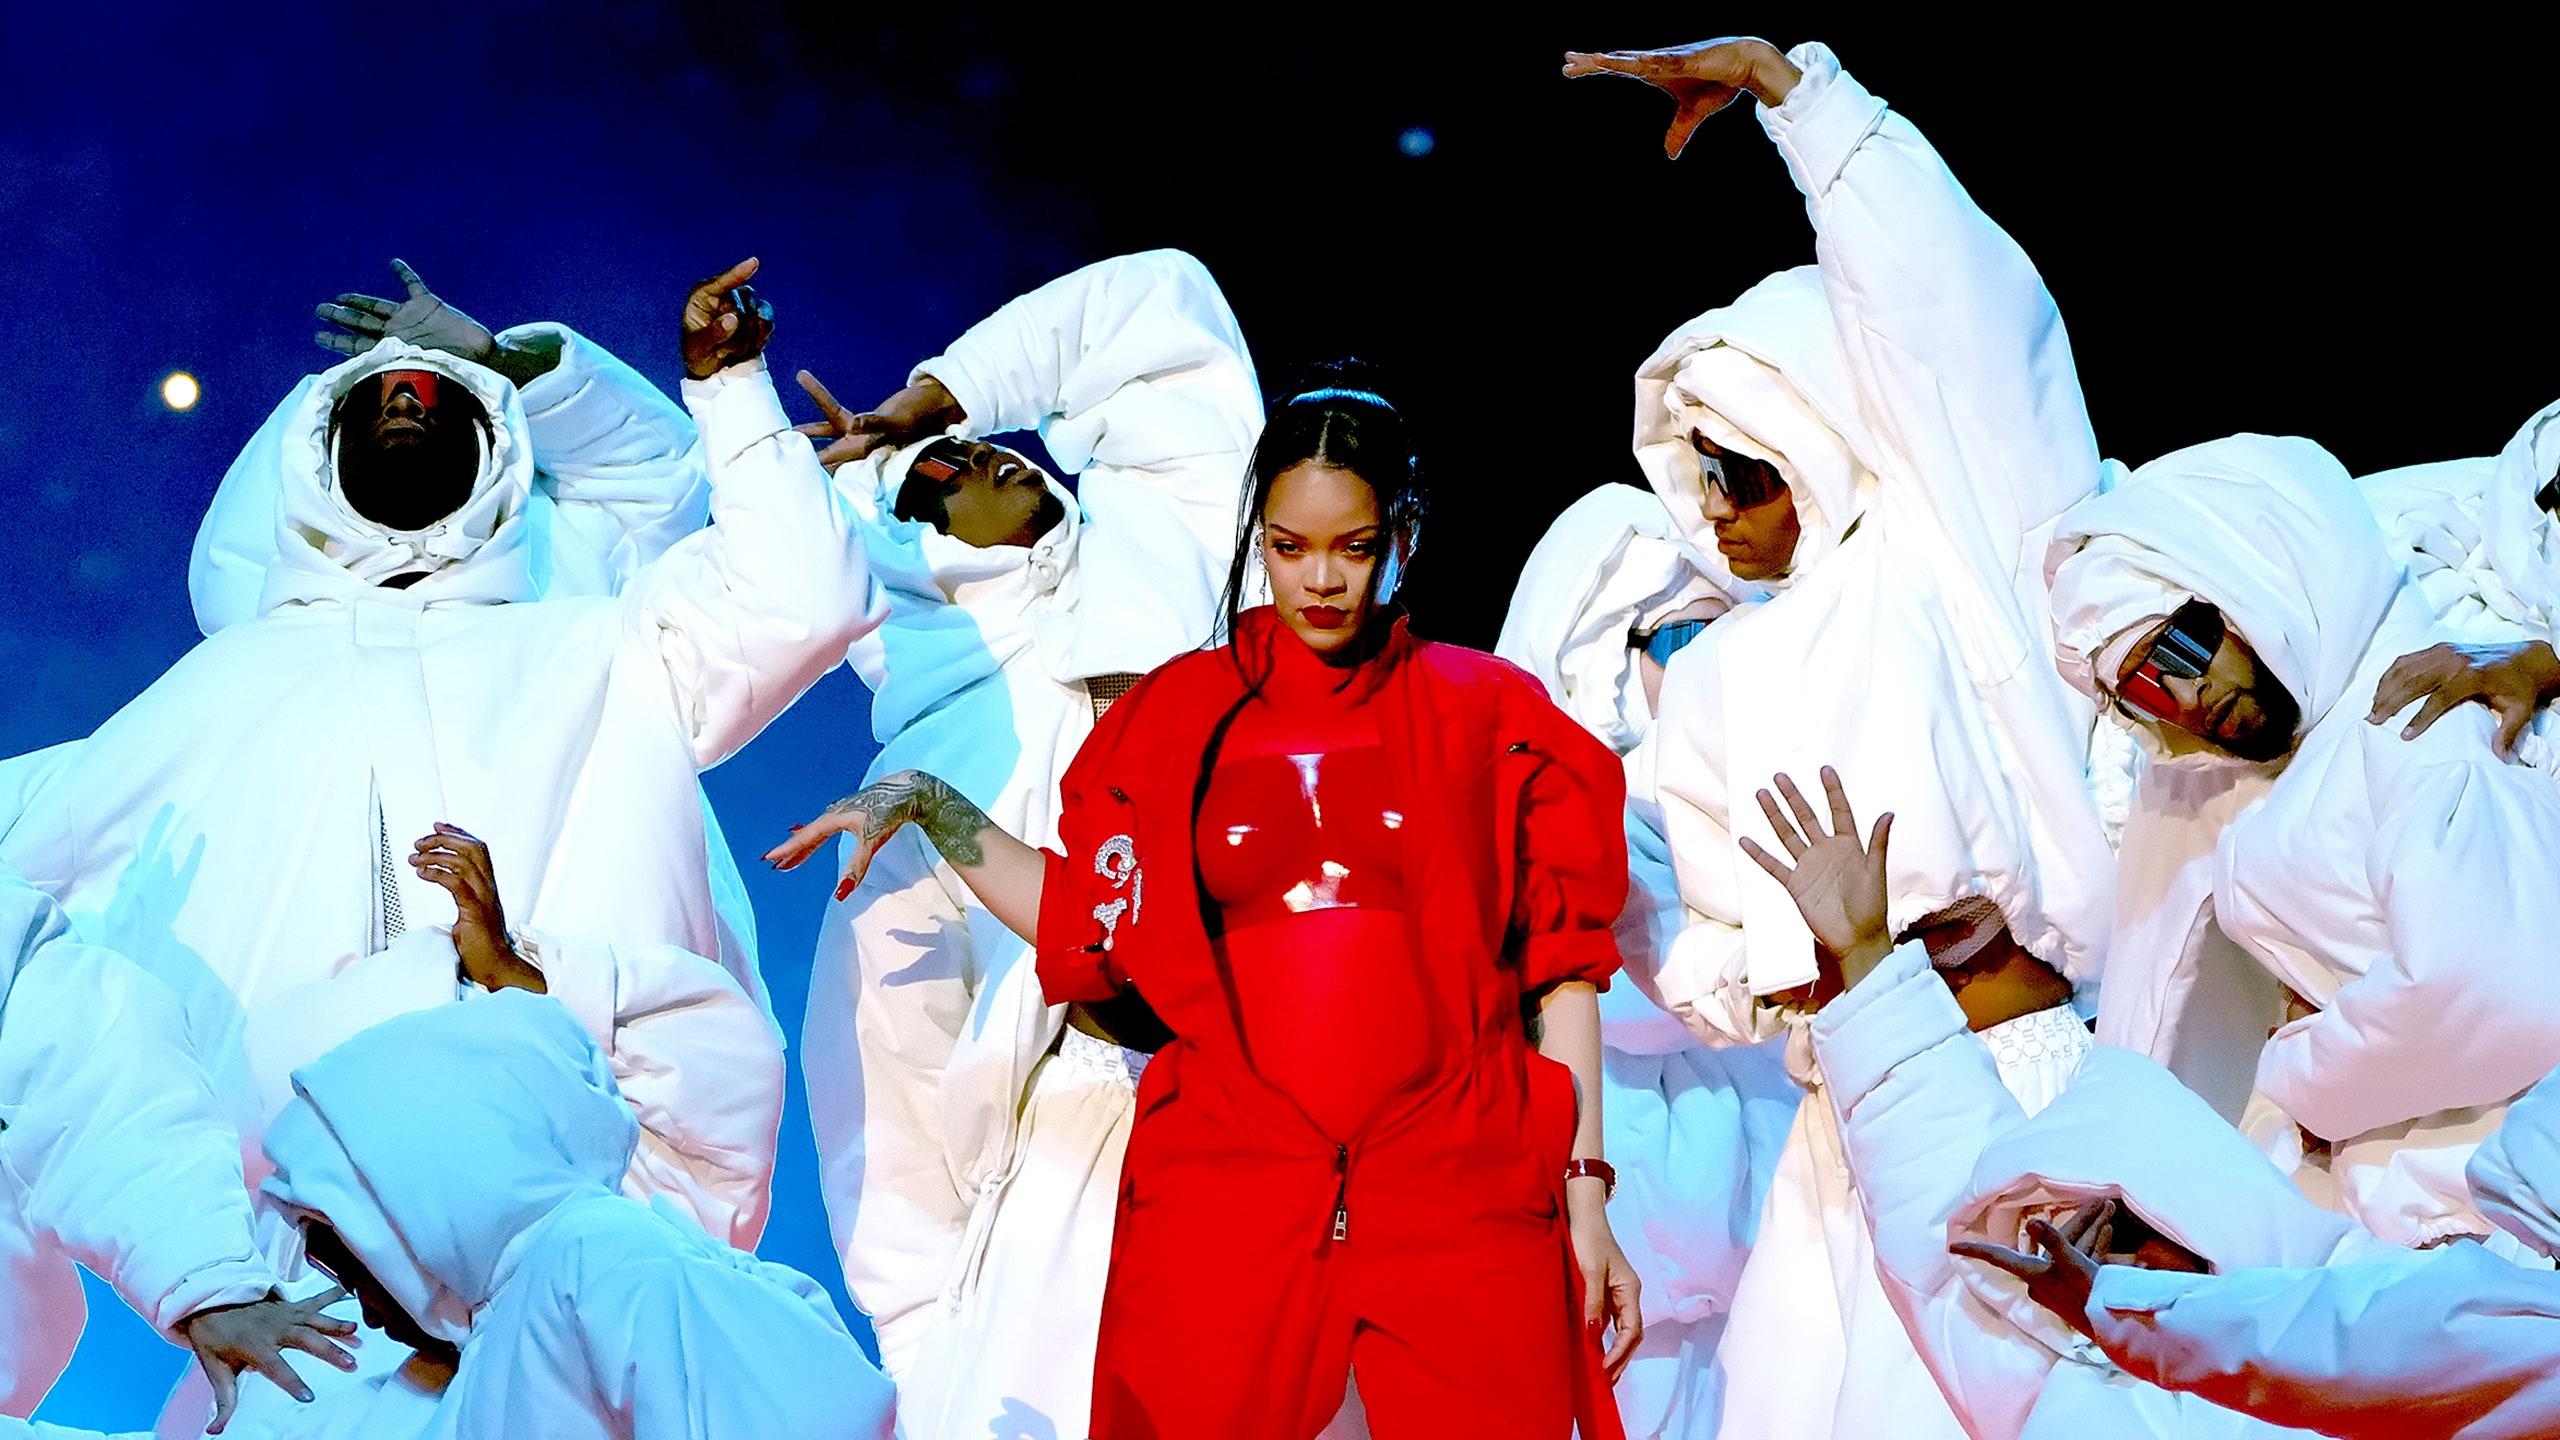 Rihanna Revealed Her Second Pregnancy in an Effortlessly Cool Super Bowl LVII Halftime Show